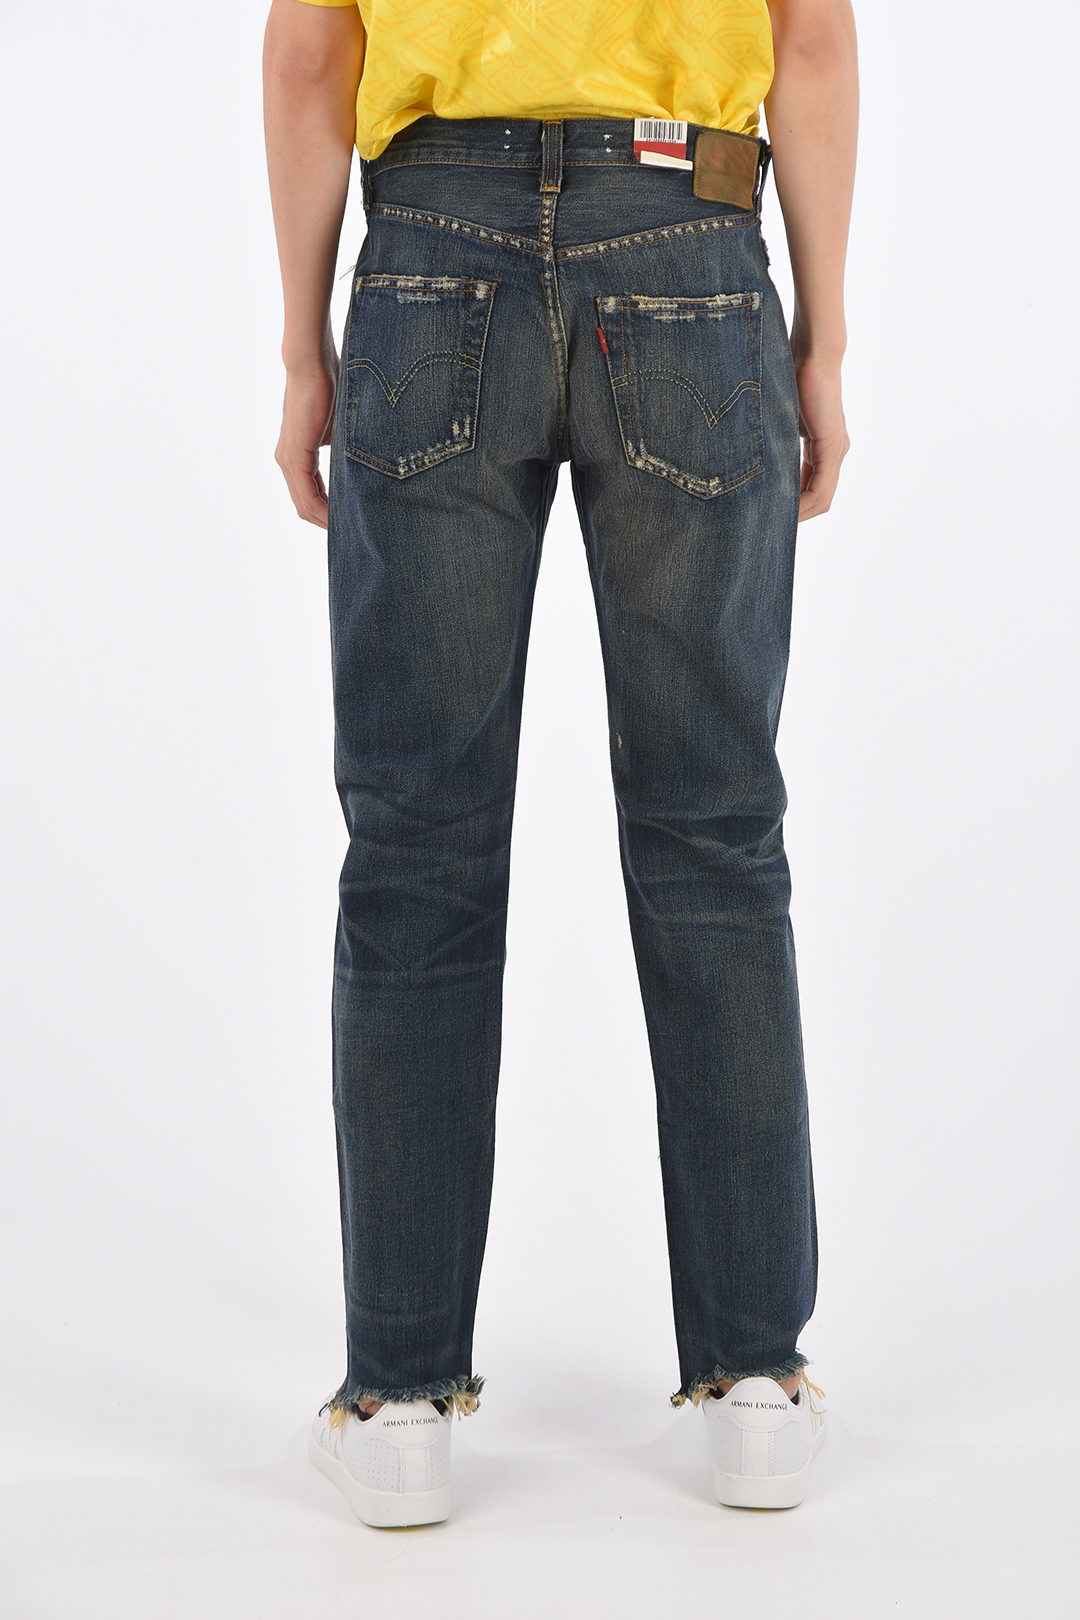 levi's distressed jeans mens